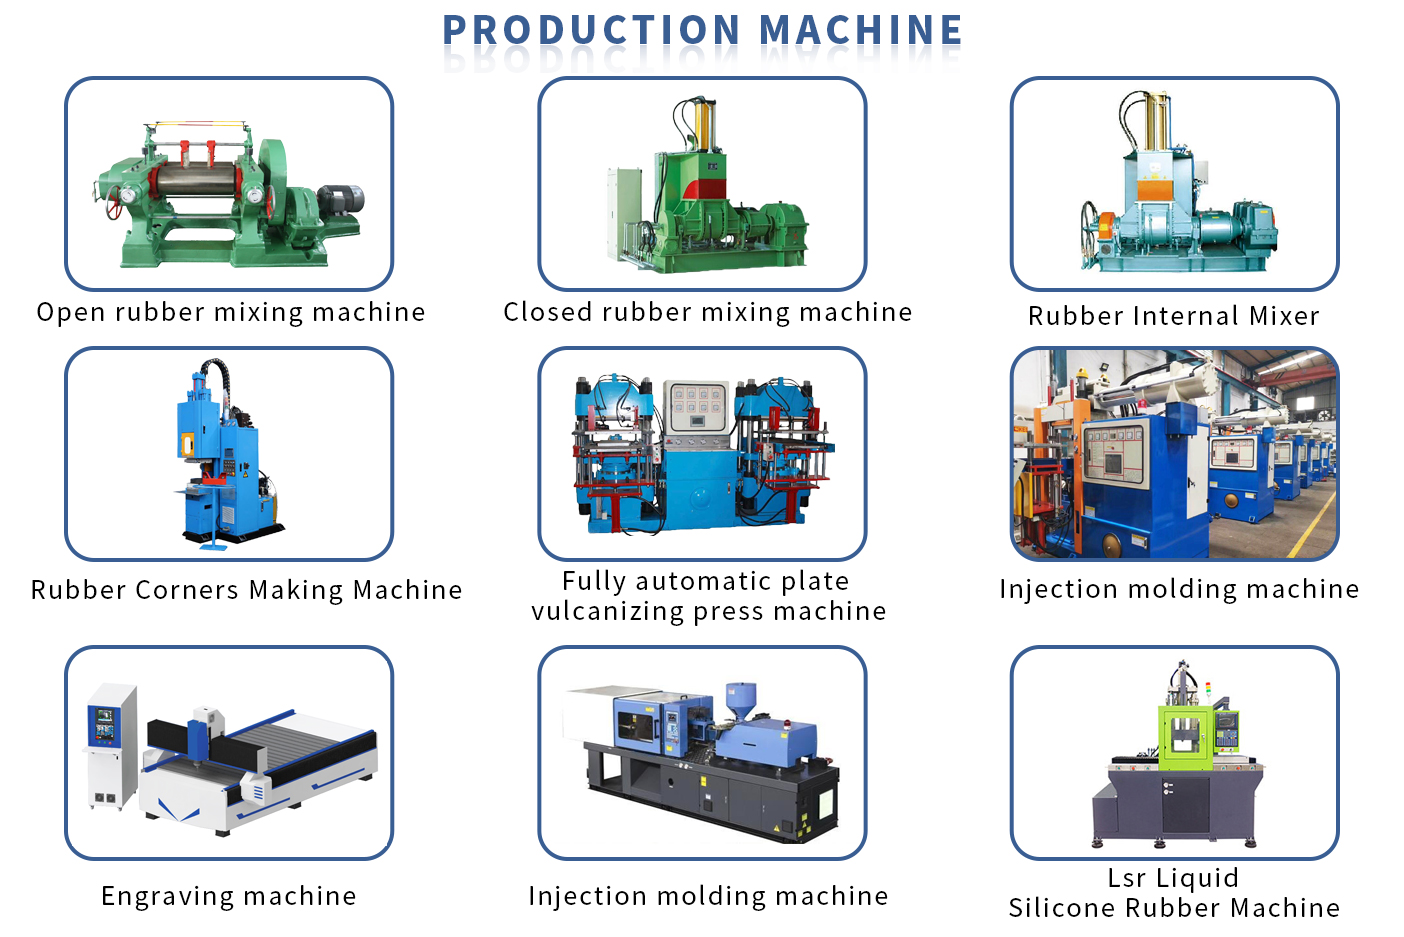 Production Machine